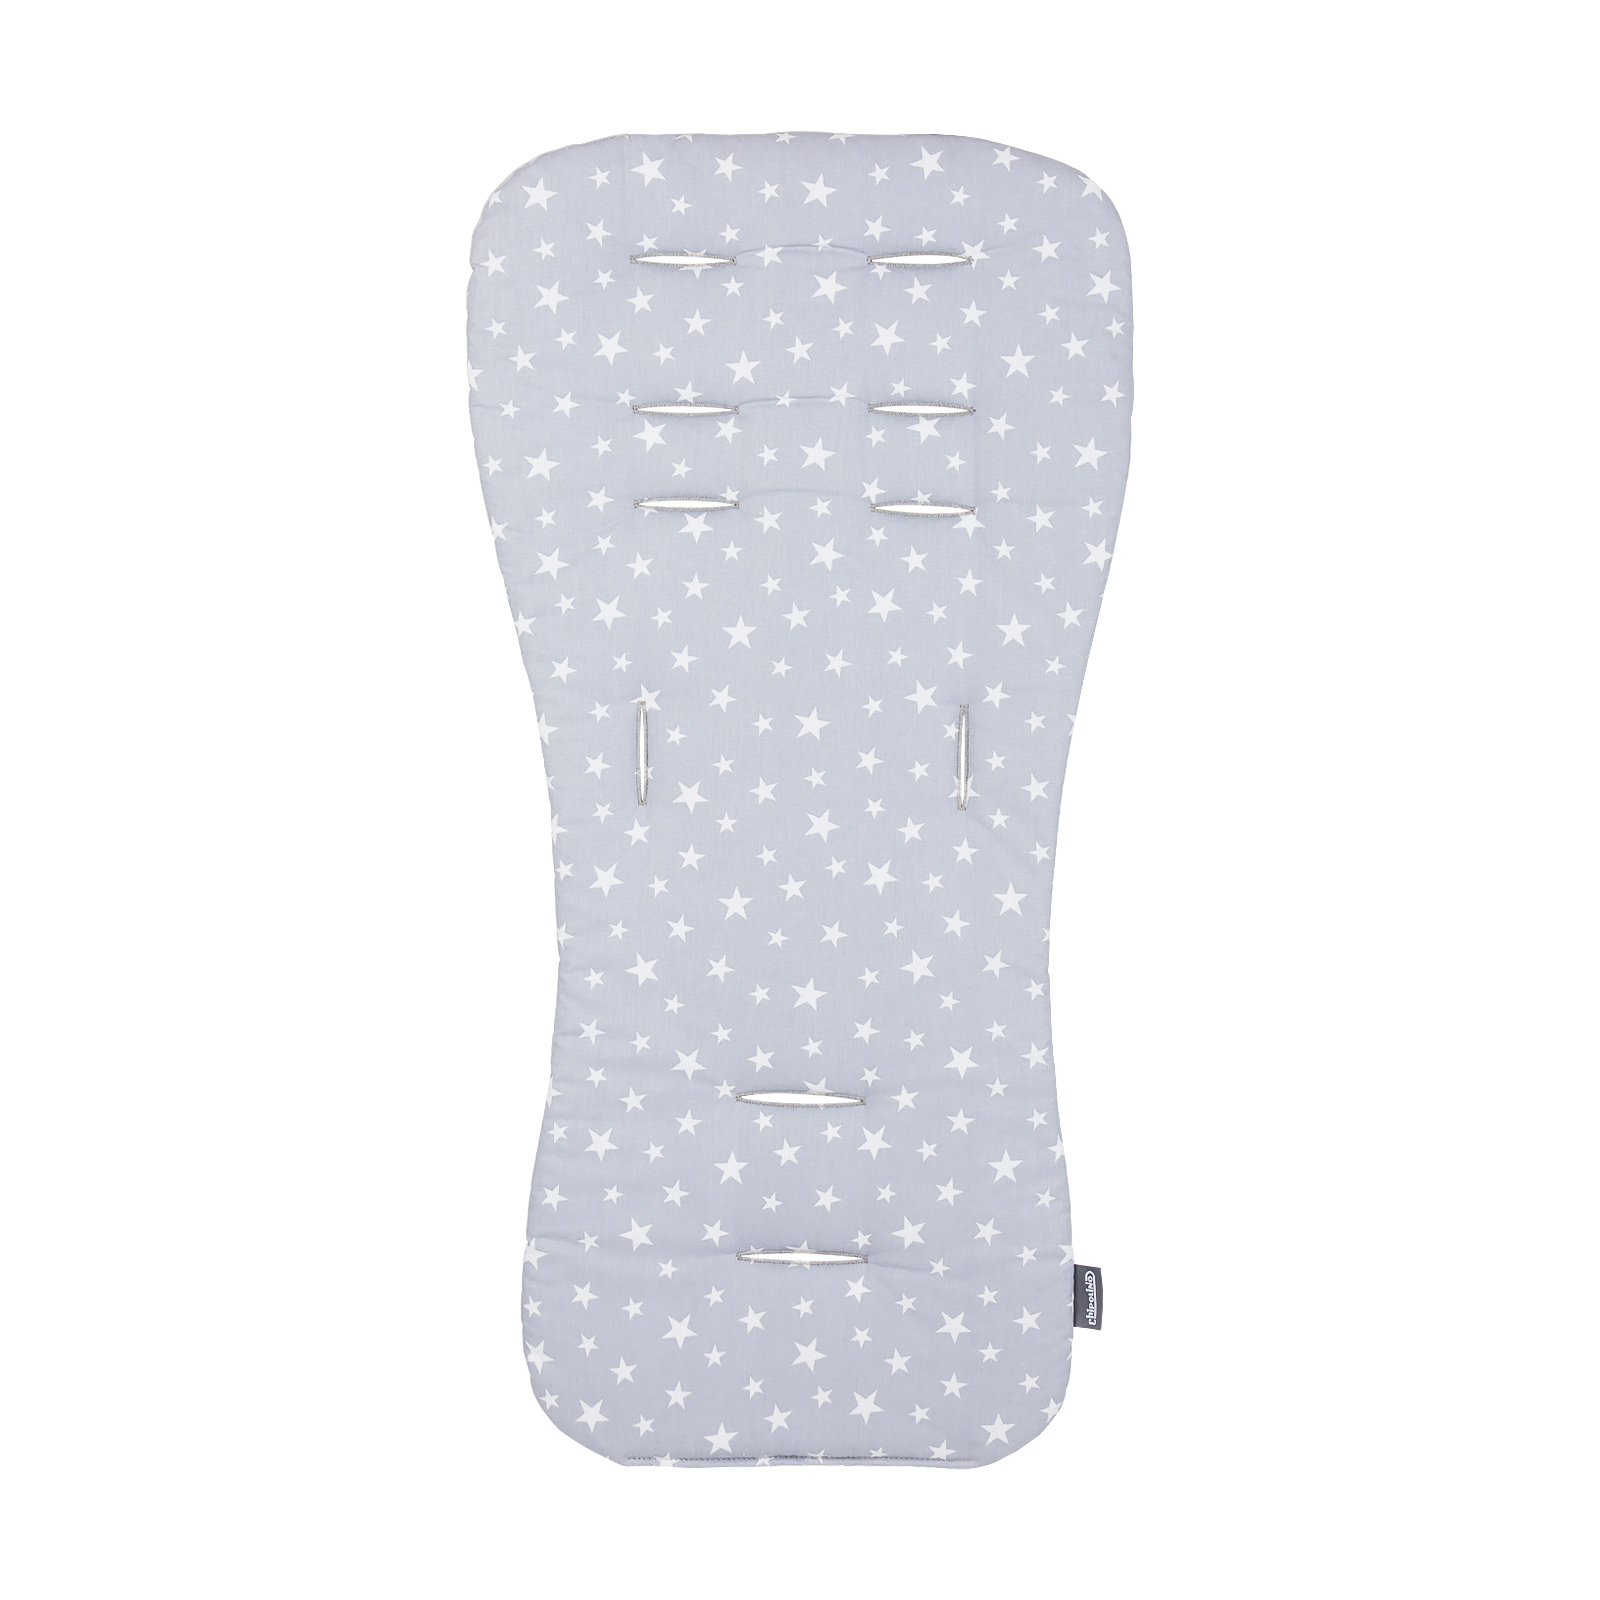 Chipolino Soft pad for stroller grey/grey stars VVPAD02403GREY